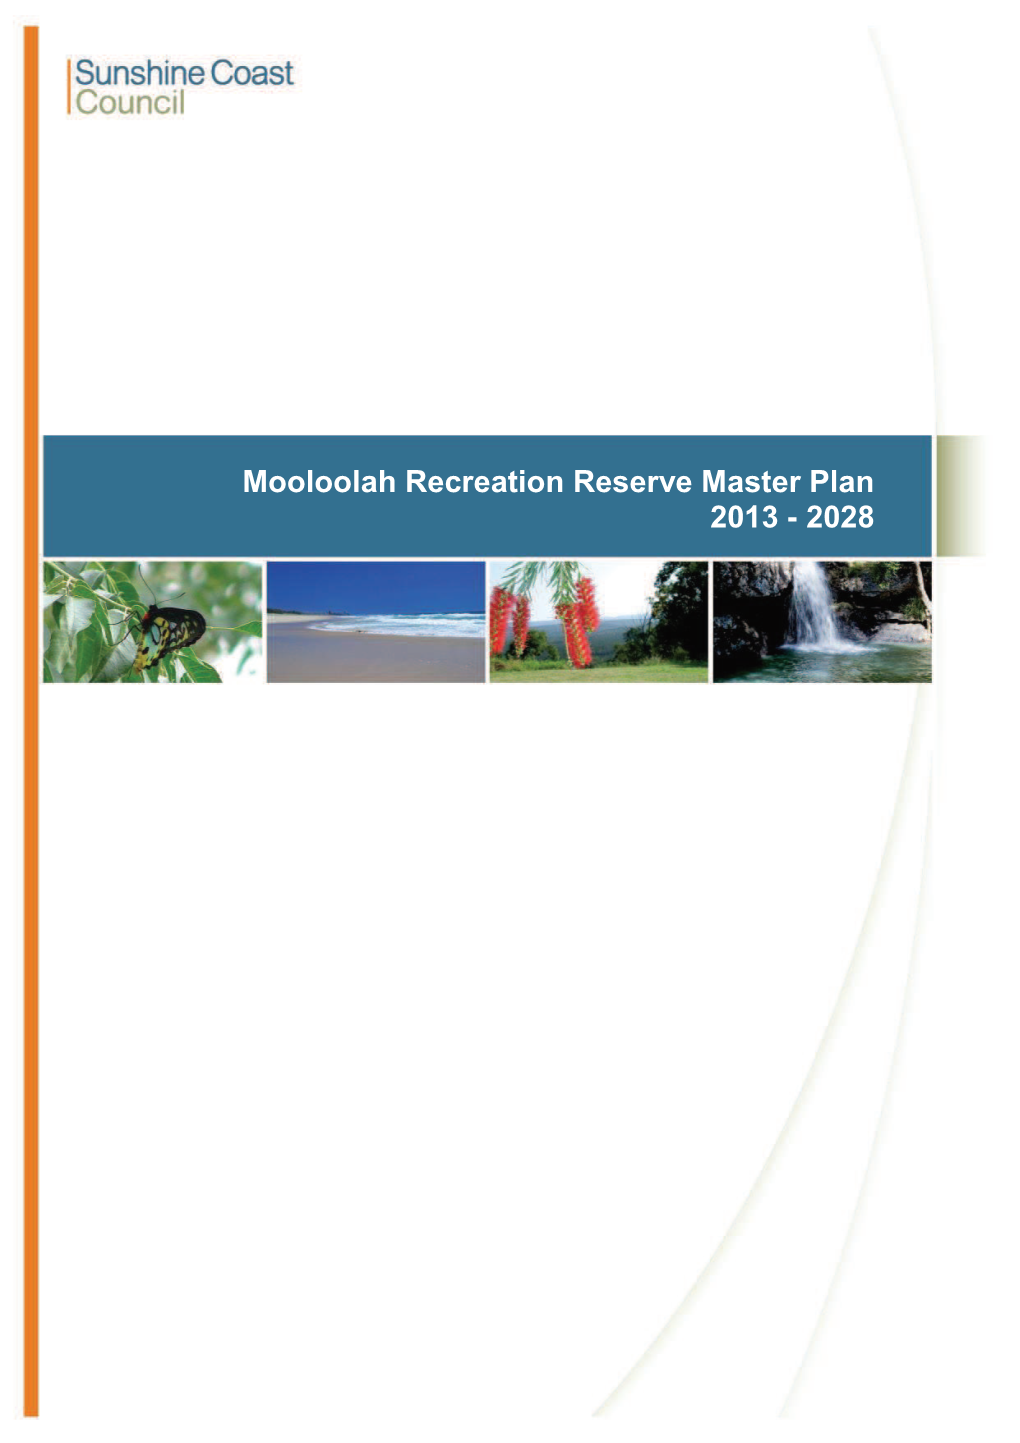 Mooloolah Recreation Reserve Master Plan 2013 - 2028